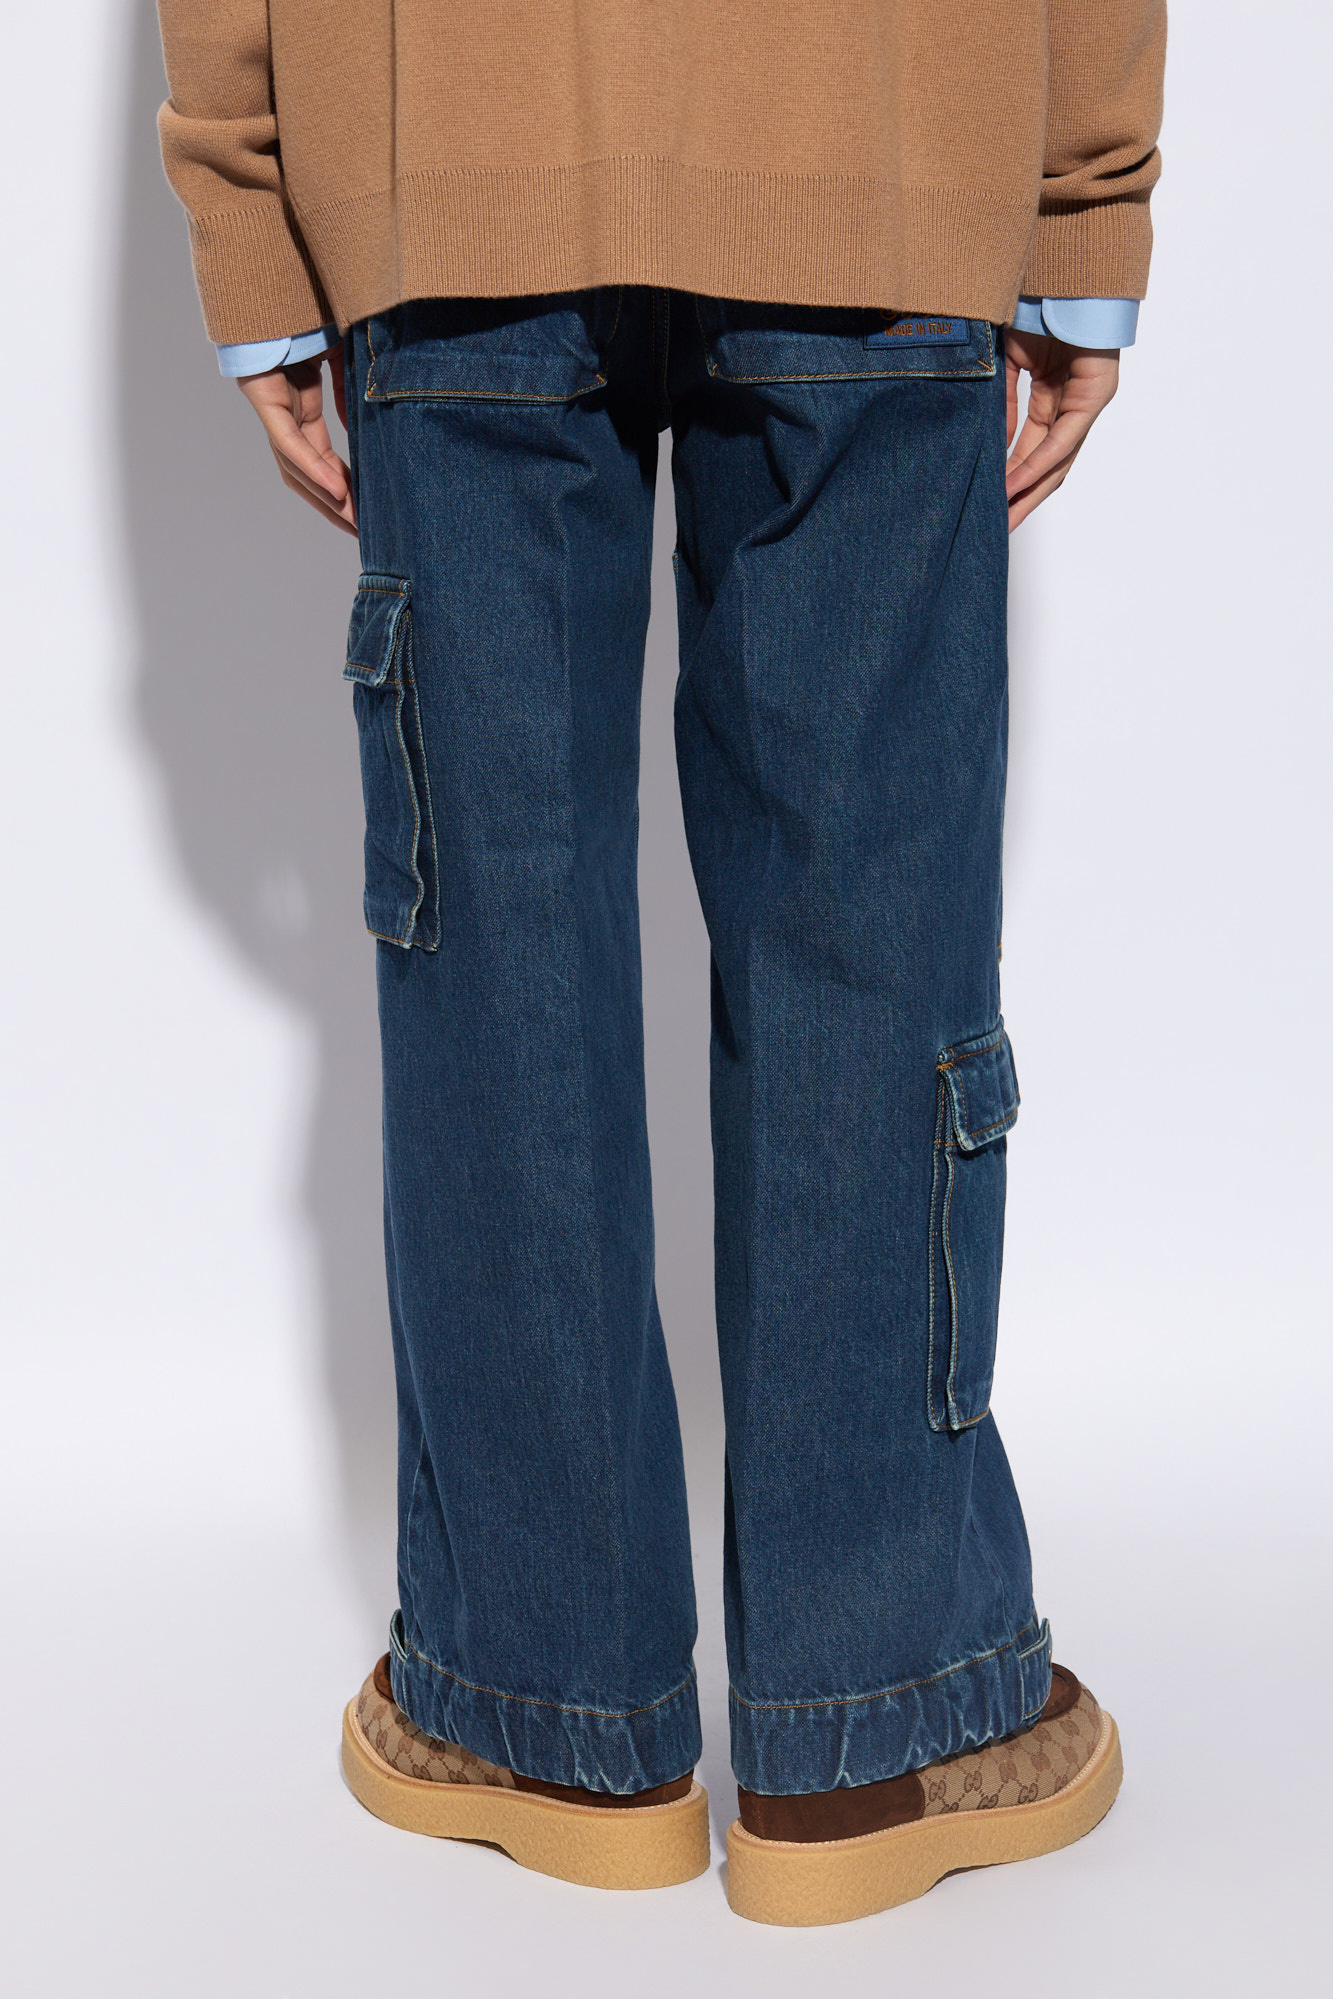 gucci 50cm Cargo jeans